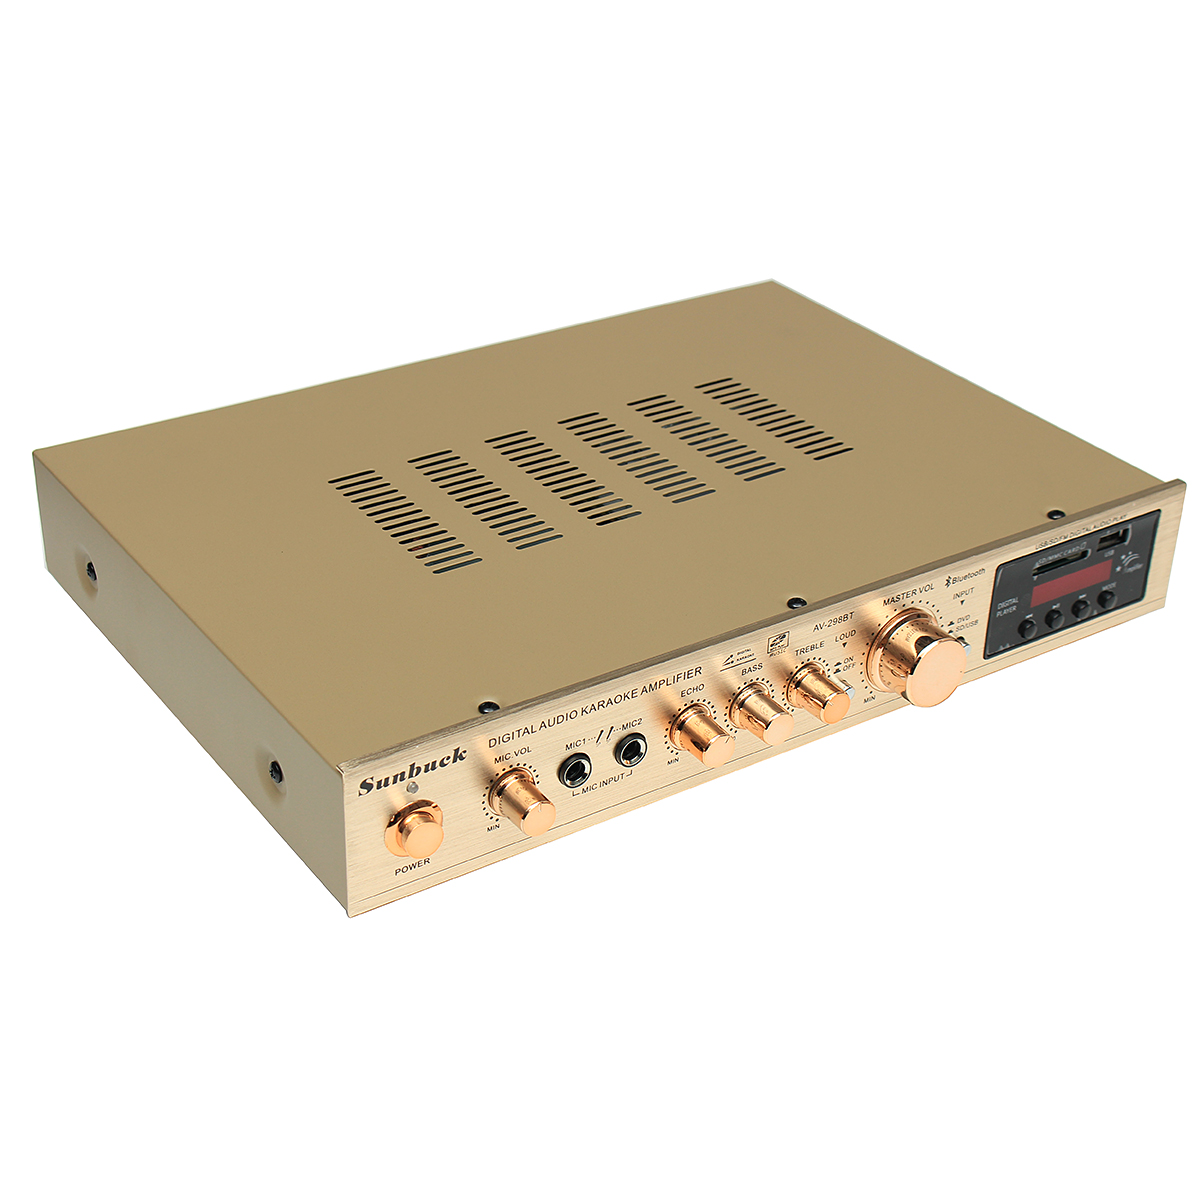 Sunbuck AV-298BT bluetooth 5 Channel FM 1200W 220V Amplifier with Remote Control Support SD MMC USB